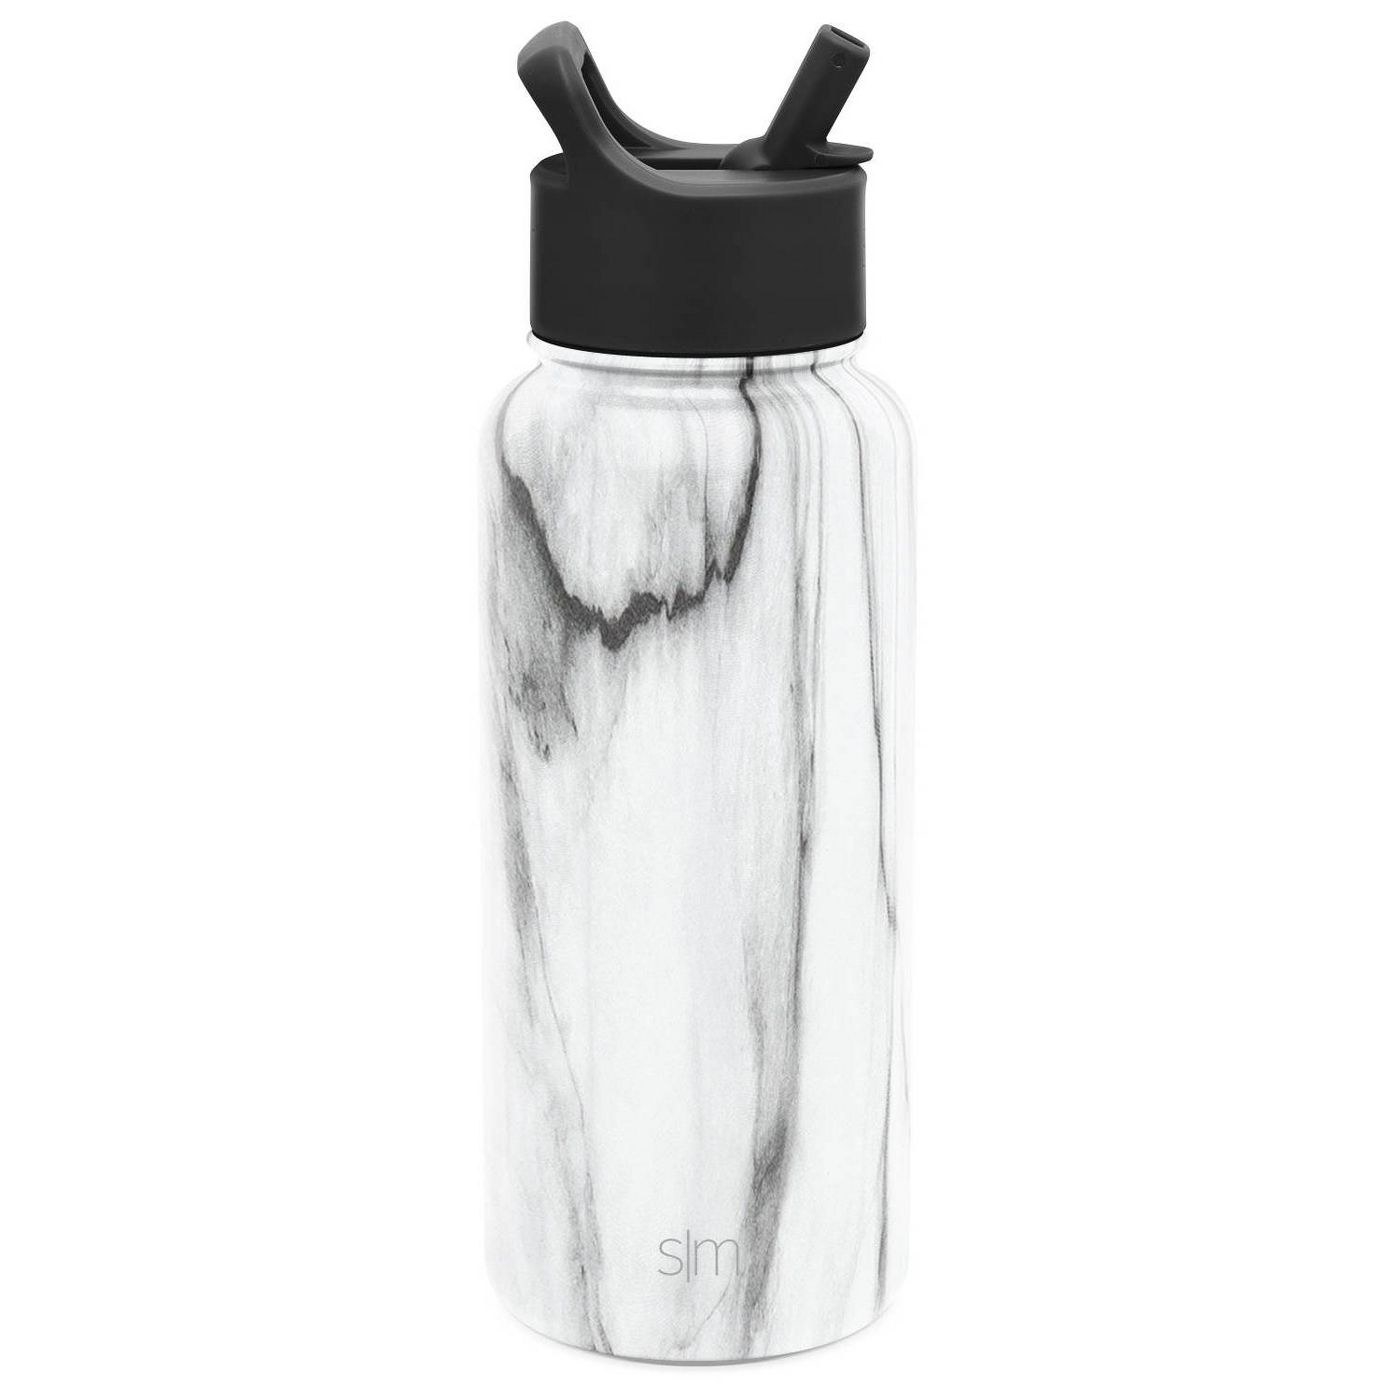 A marble water bottle